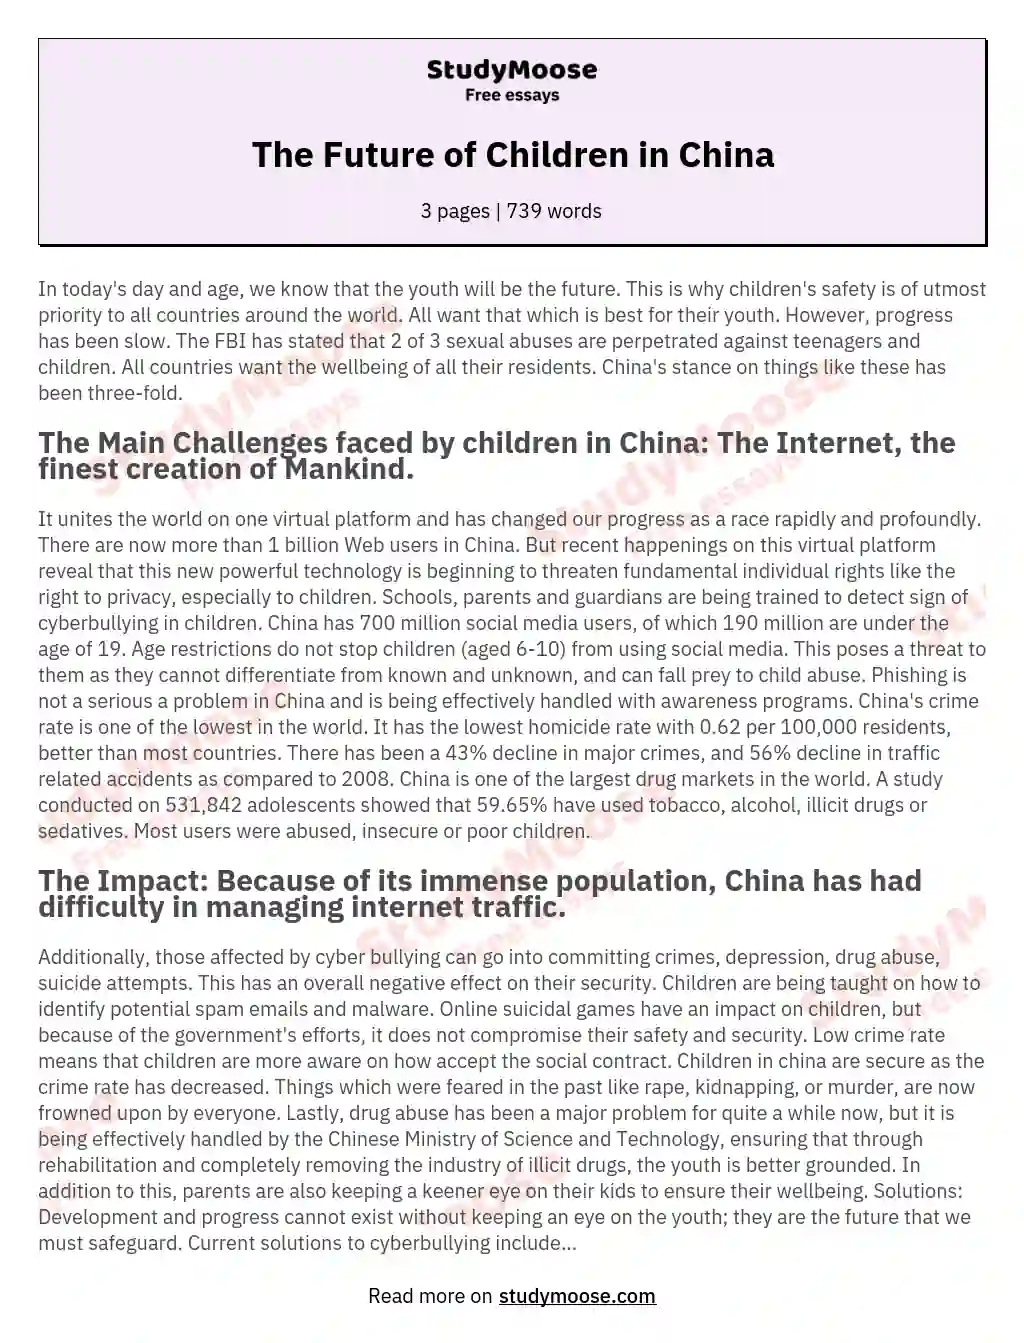 The Future of Children in China essay